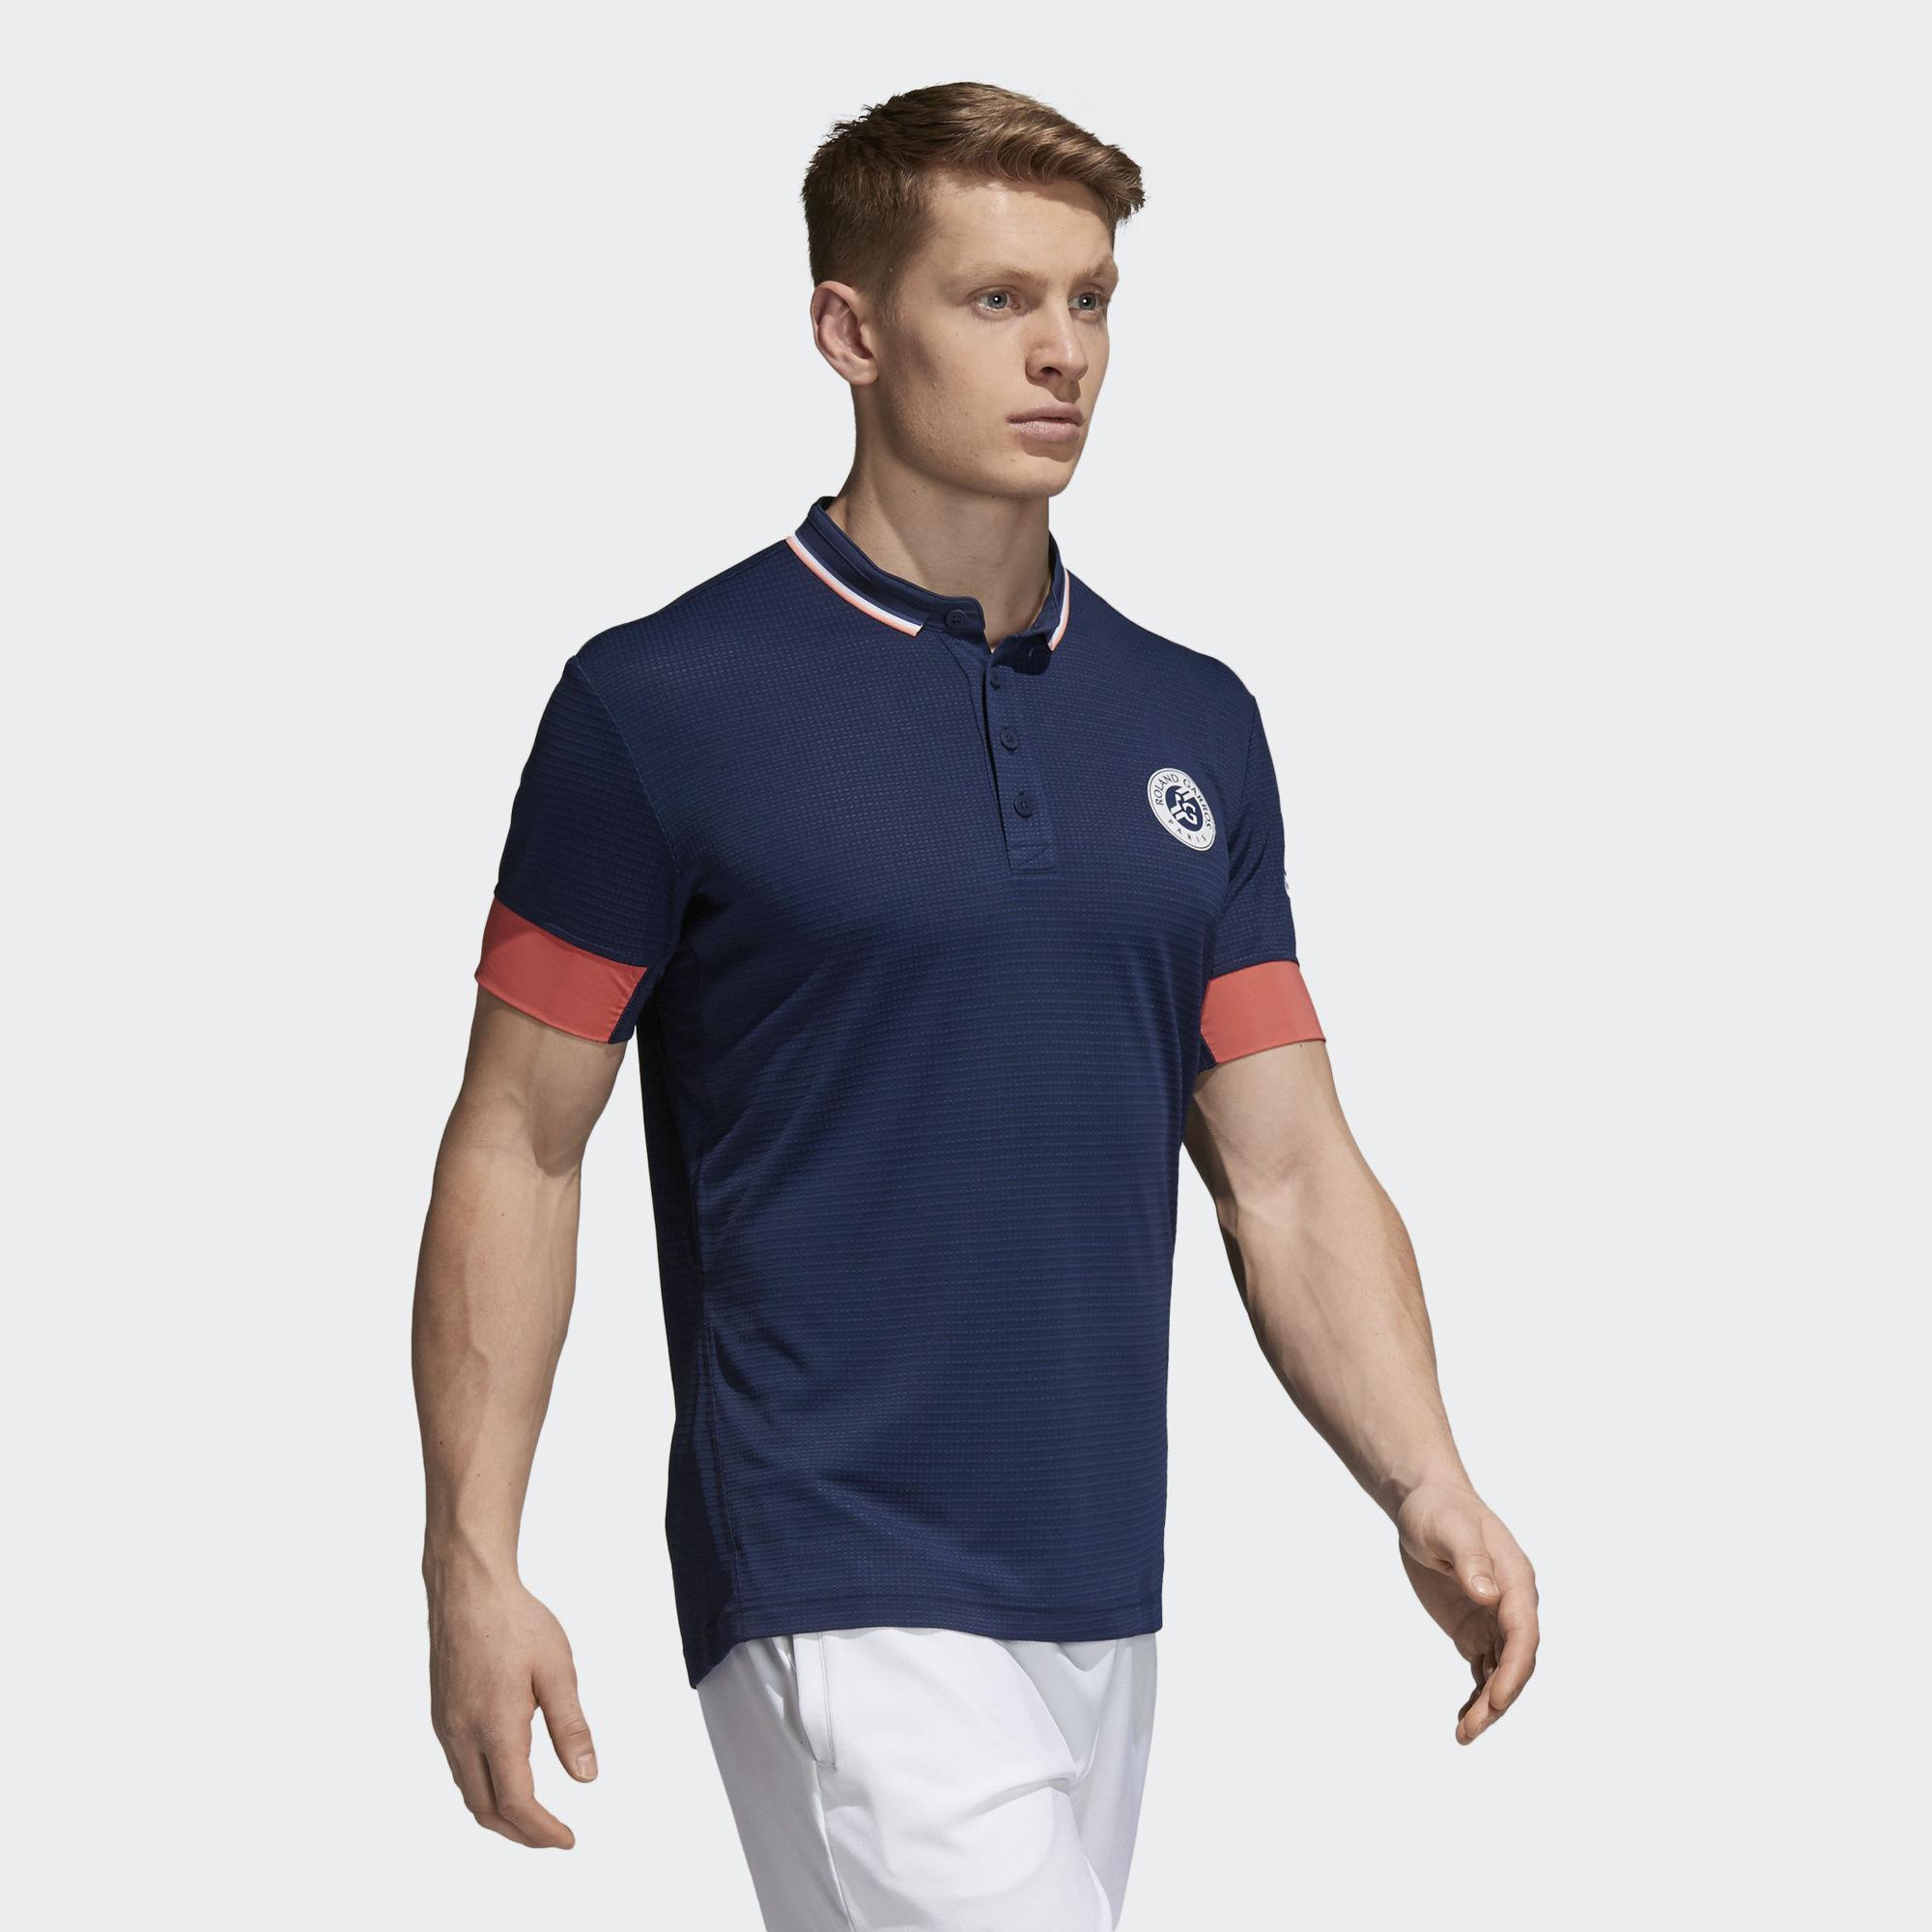 más Instantáneamente Embotellamiento Adidas Mens Roland Garros Climachill Polo Shirt - Navy - Tennisnuts.com